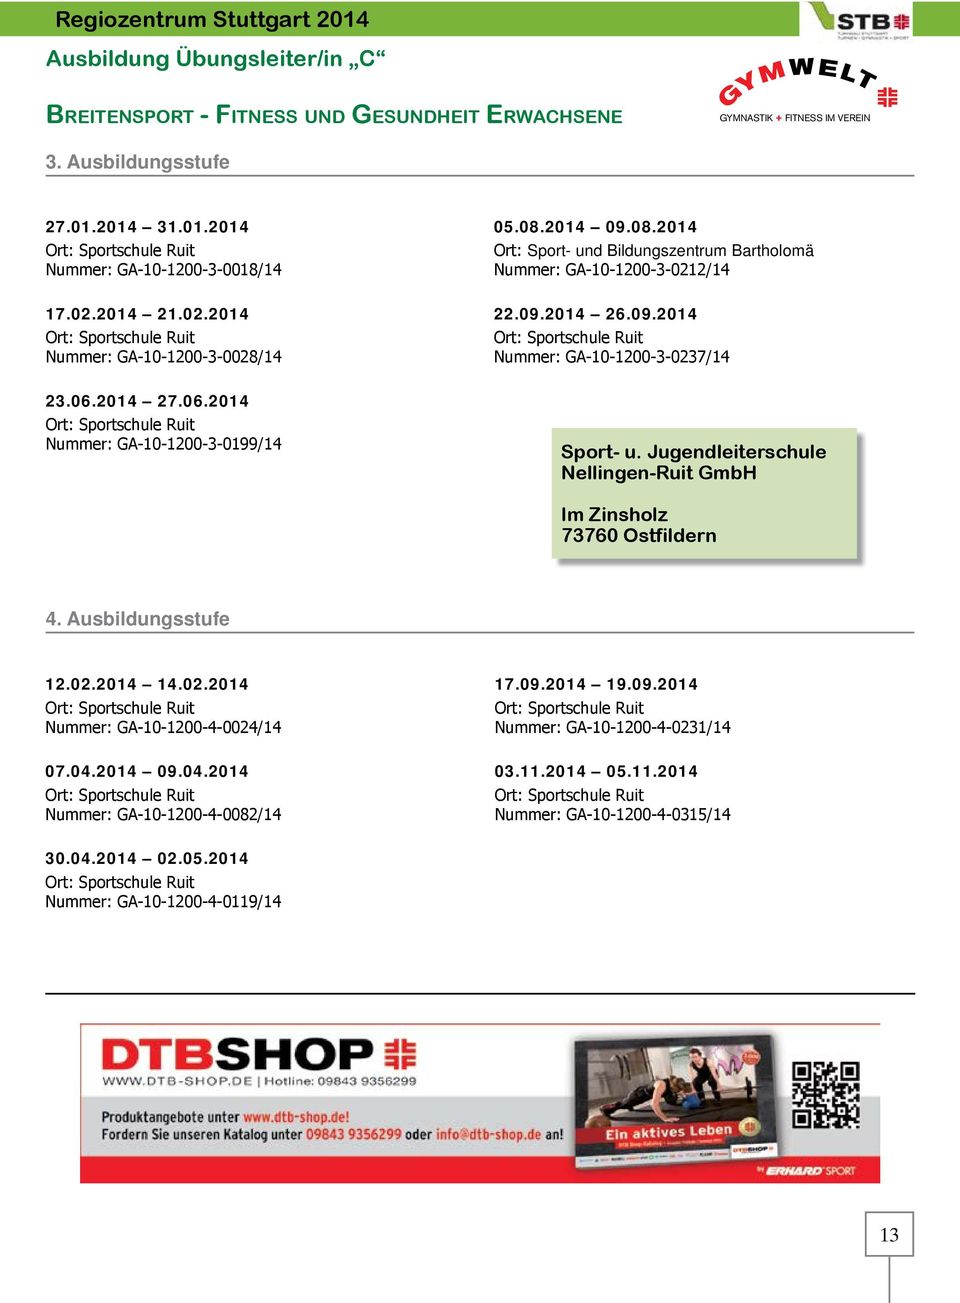 06.2014 27.06.2014 Sportschule Ruit Nummer: GA-10-1200-3-0199/14 Sport- u. Jugendleiterschule Nellingen-Ruit GmbH Im Zinsholz 73760 Ostfildern 4. Ausbildungsstufe 12.02.